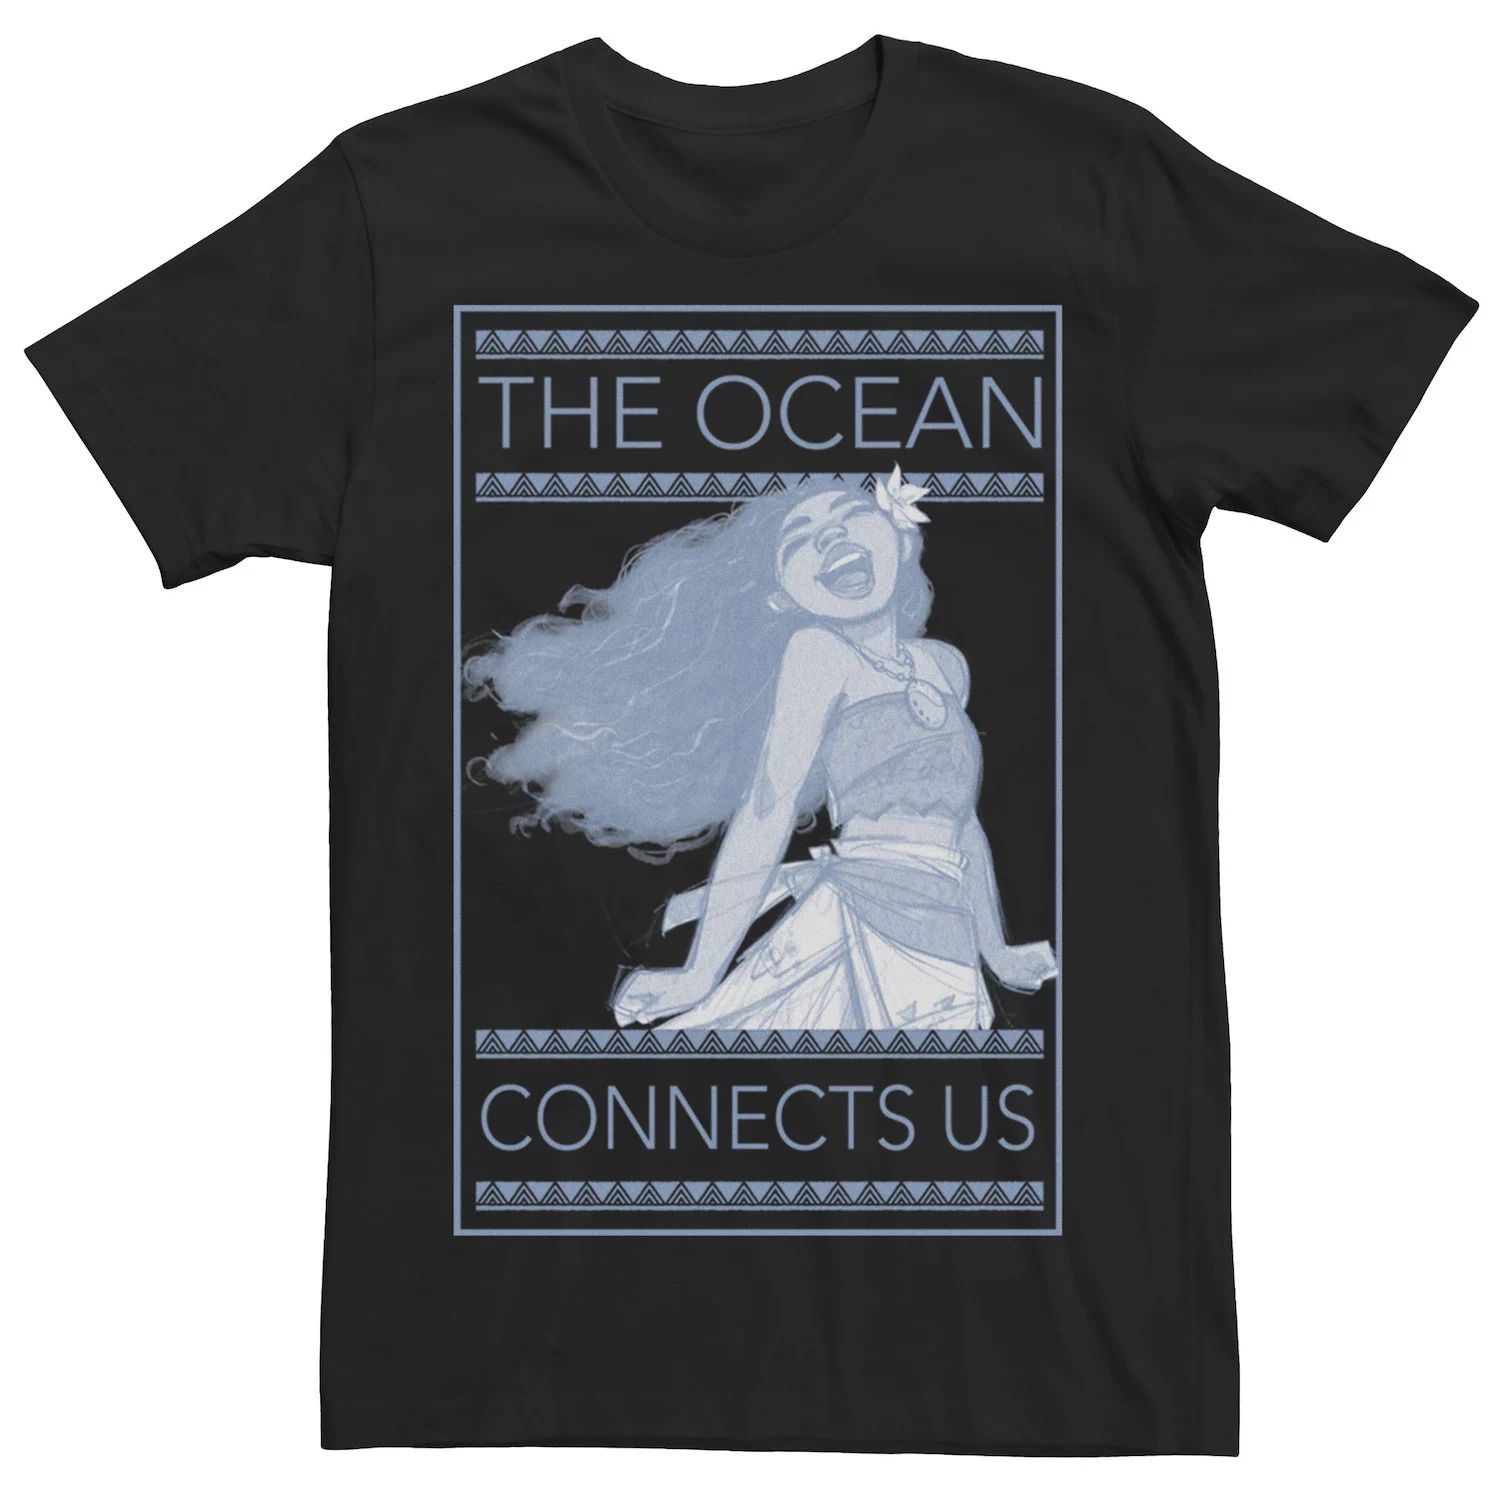 Мужская футболка Moana The Ocean Connects Us Box Disney футболка disney s moana boys 8–20 the ocean connects us с графическим рисунком кораллового цвета licensed character